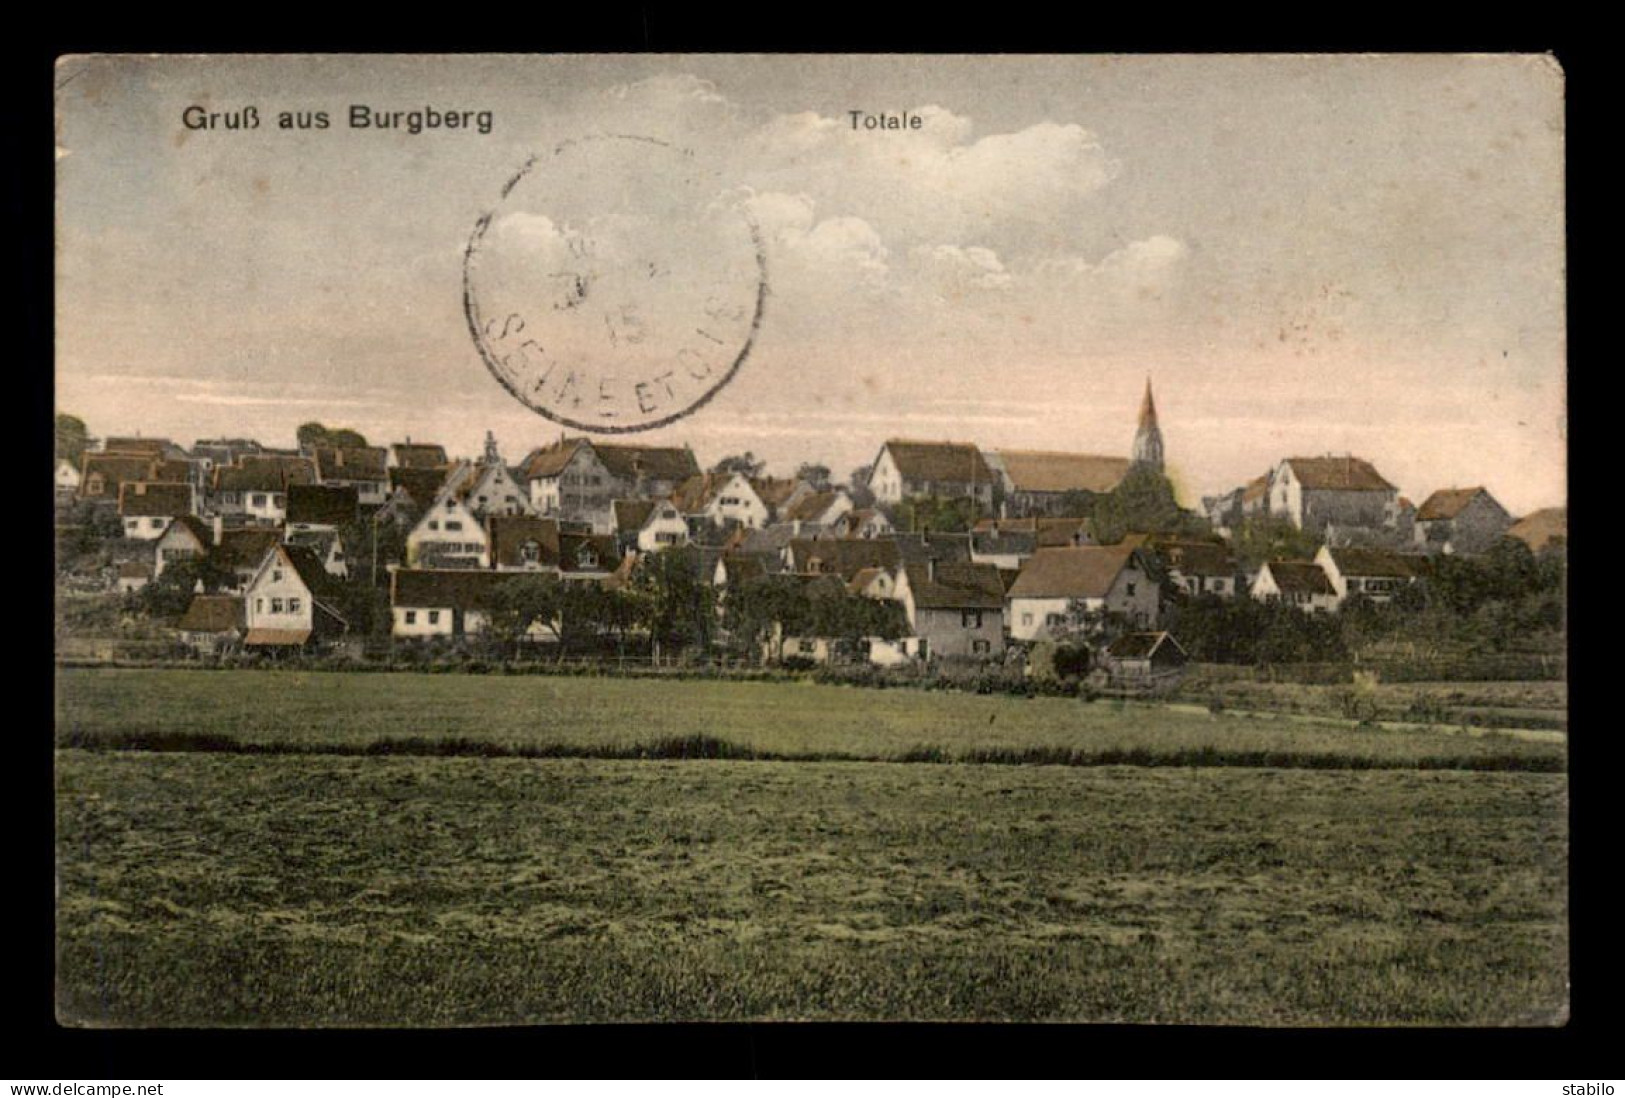 CACHET KIEGS-GEFANGENENLAGER STUTTGART II (ALLEMAGNE) SUR CARTE DE BURGBERG - GUEERE 14/18 - 1. Weltkrieg 1914-1918